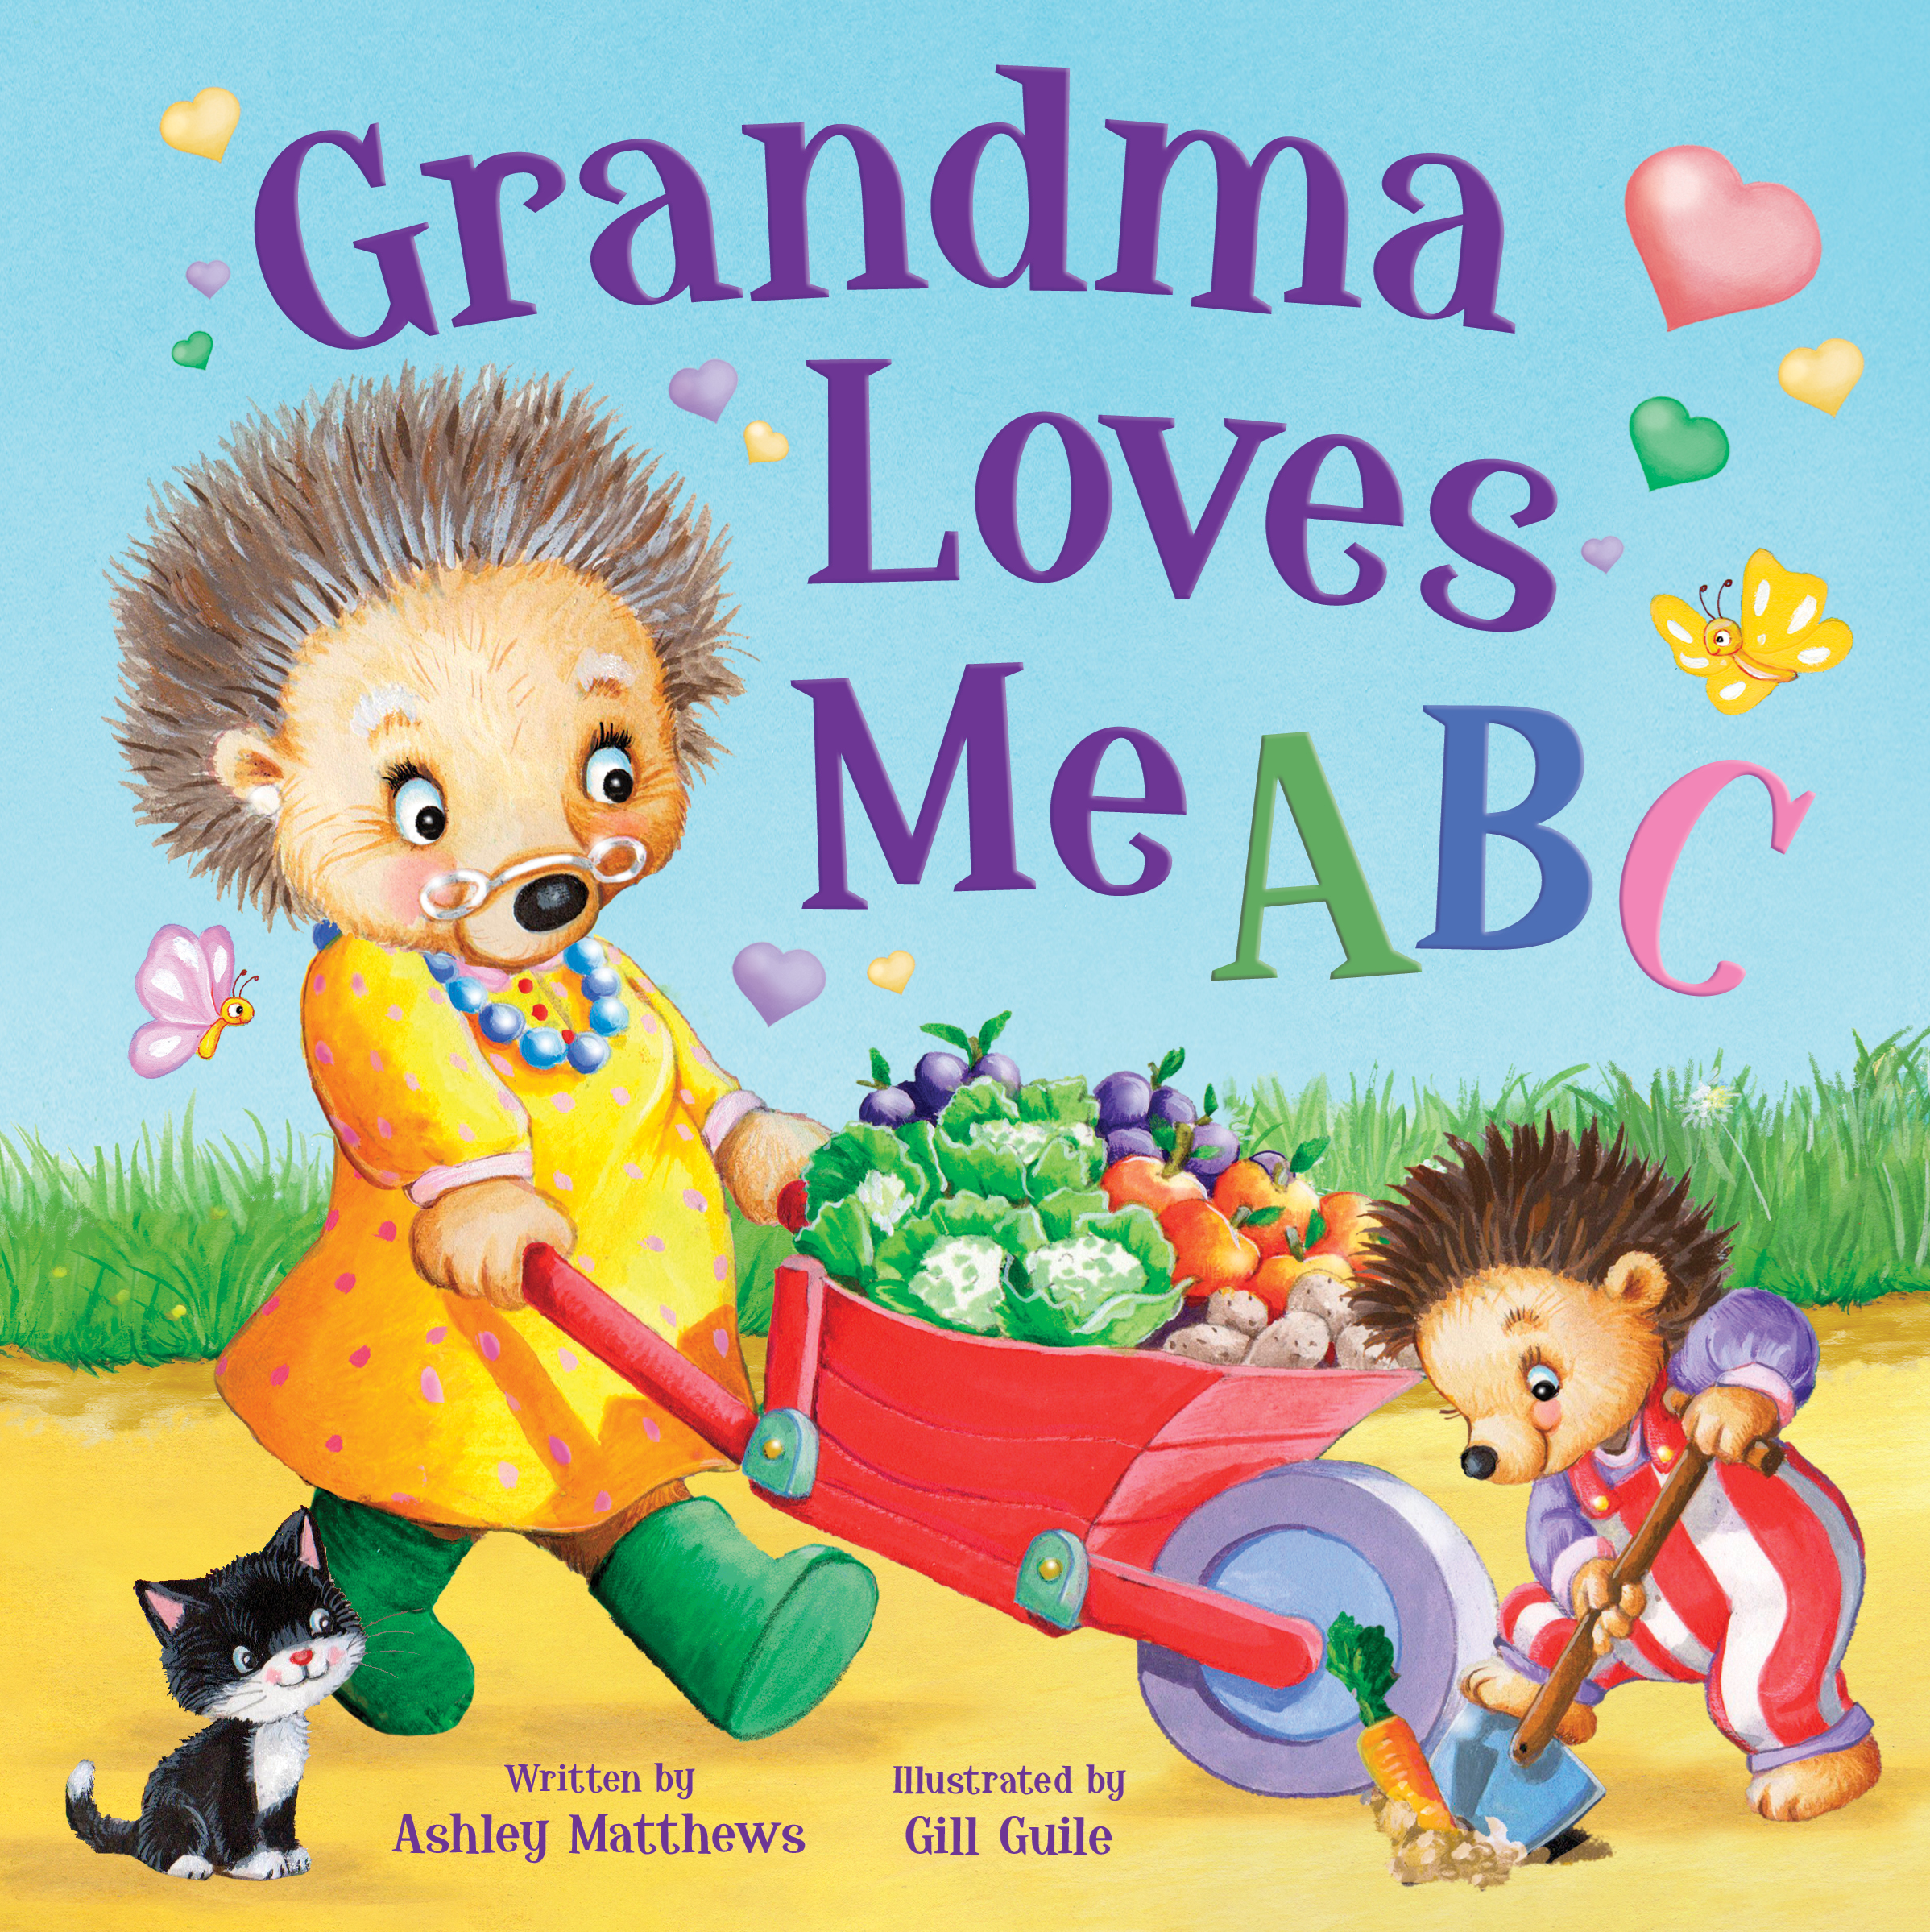 Grandma Loves Me ABC